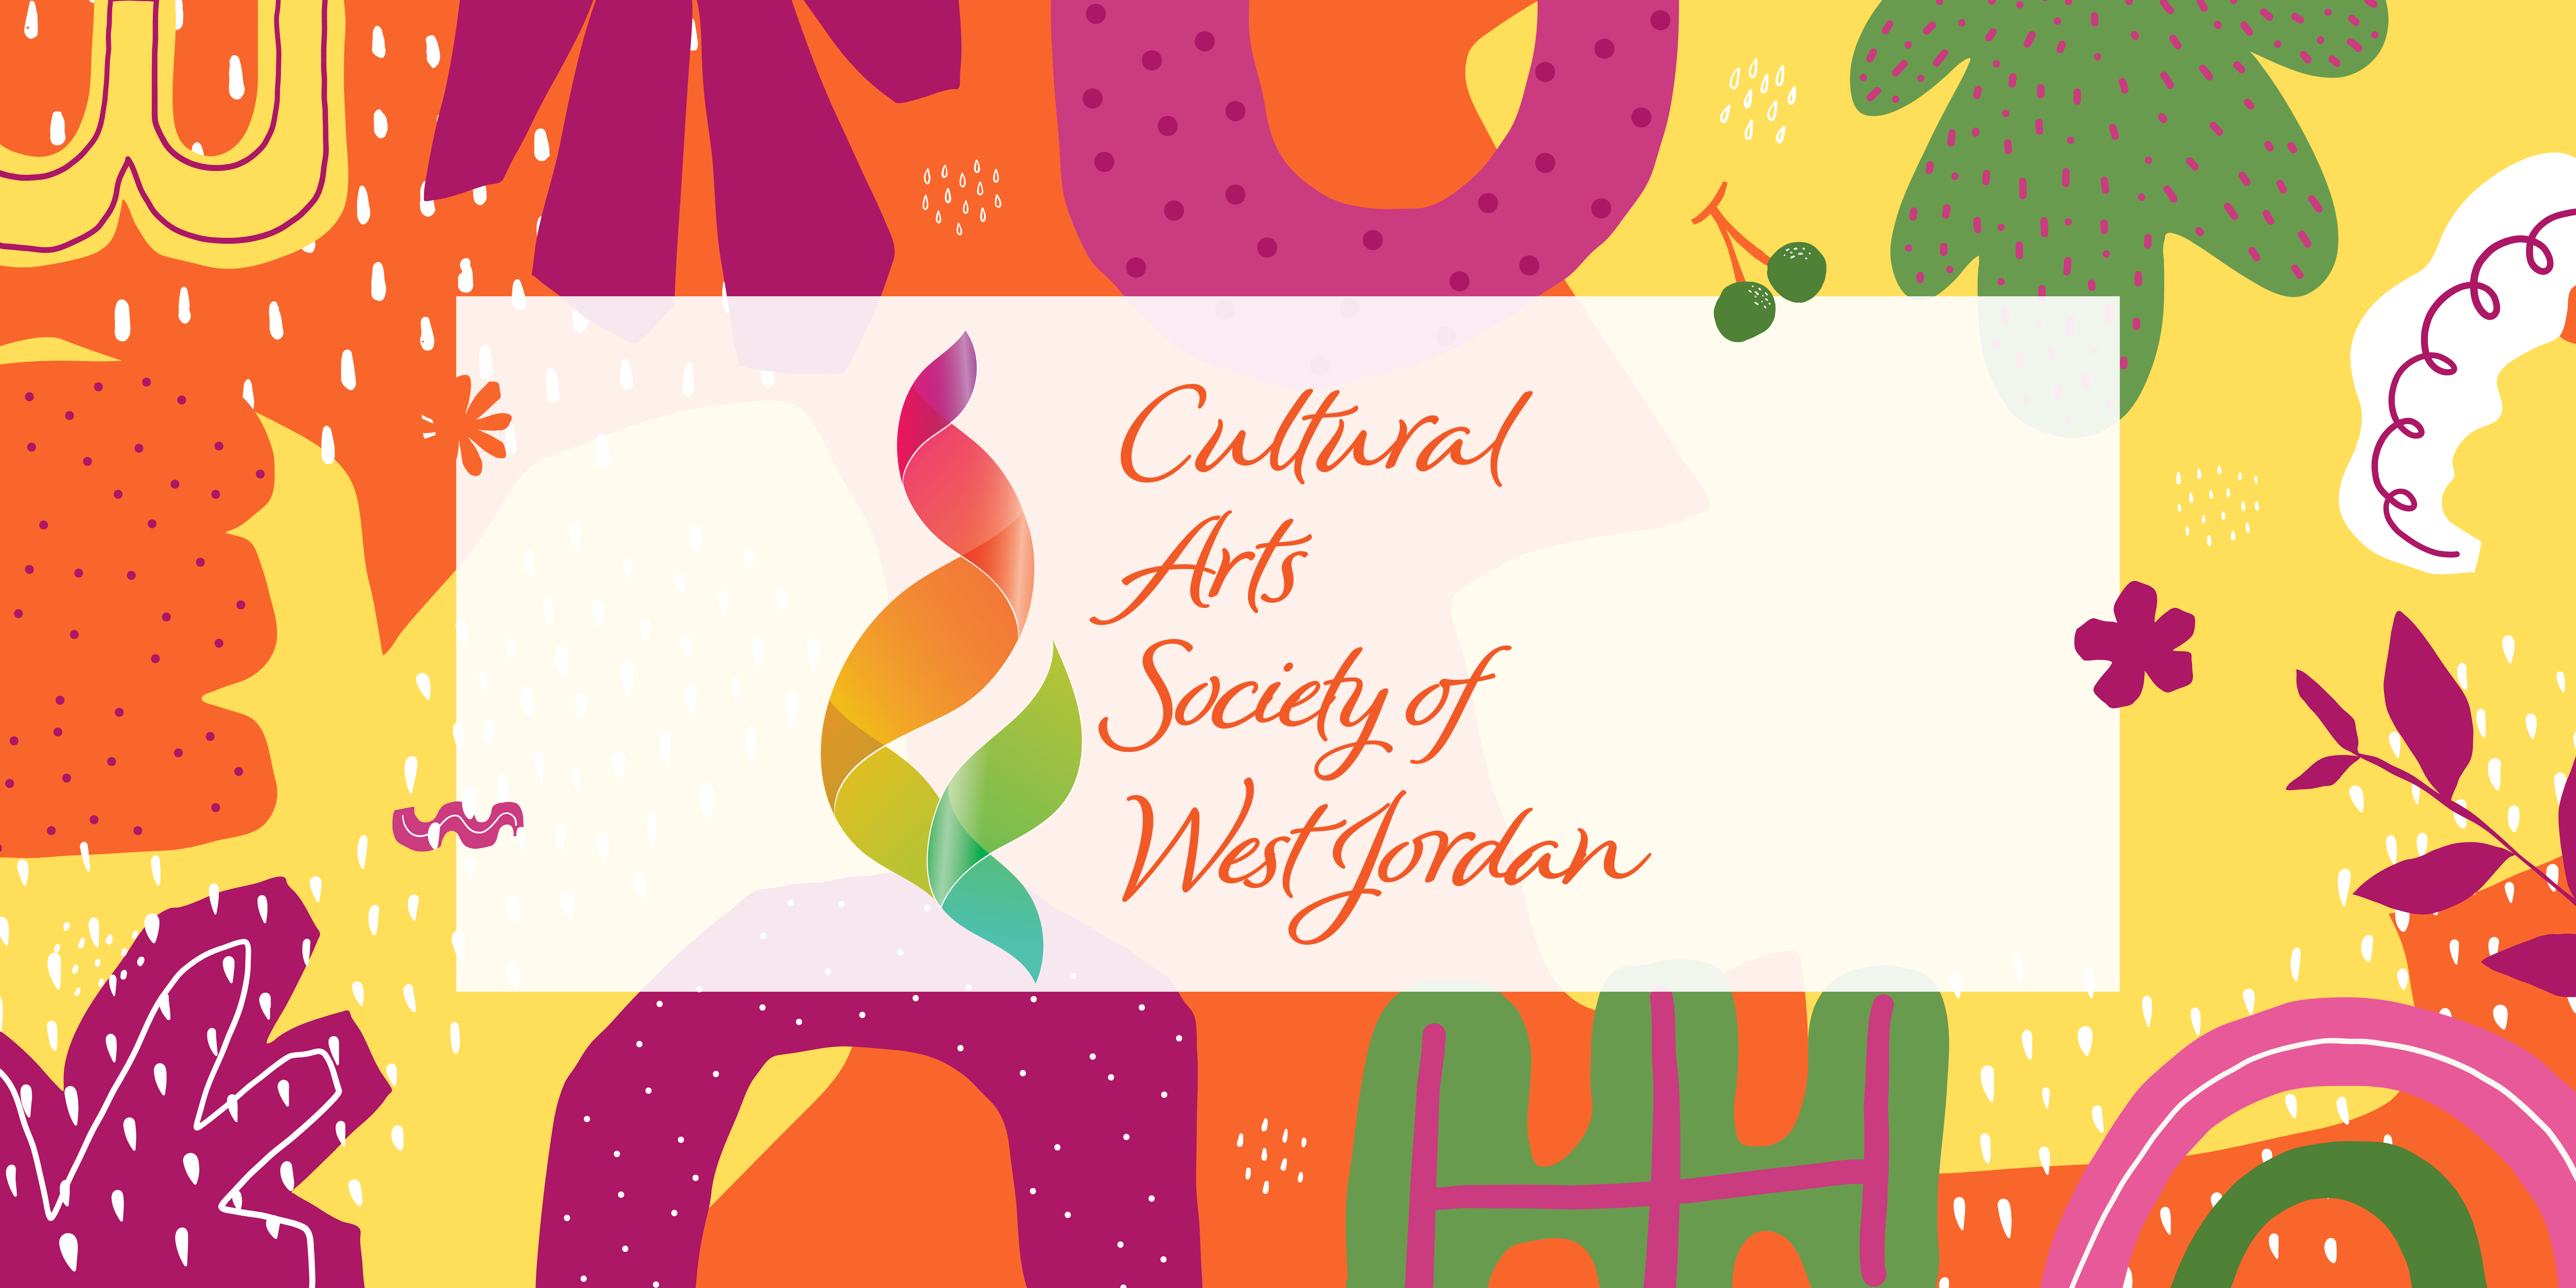 Cultural Arts Society of West Jordan